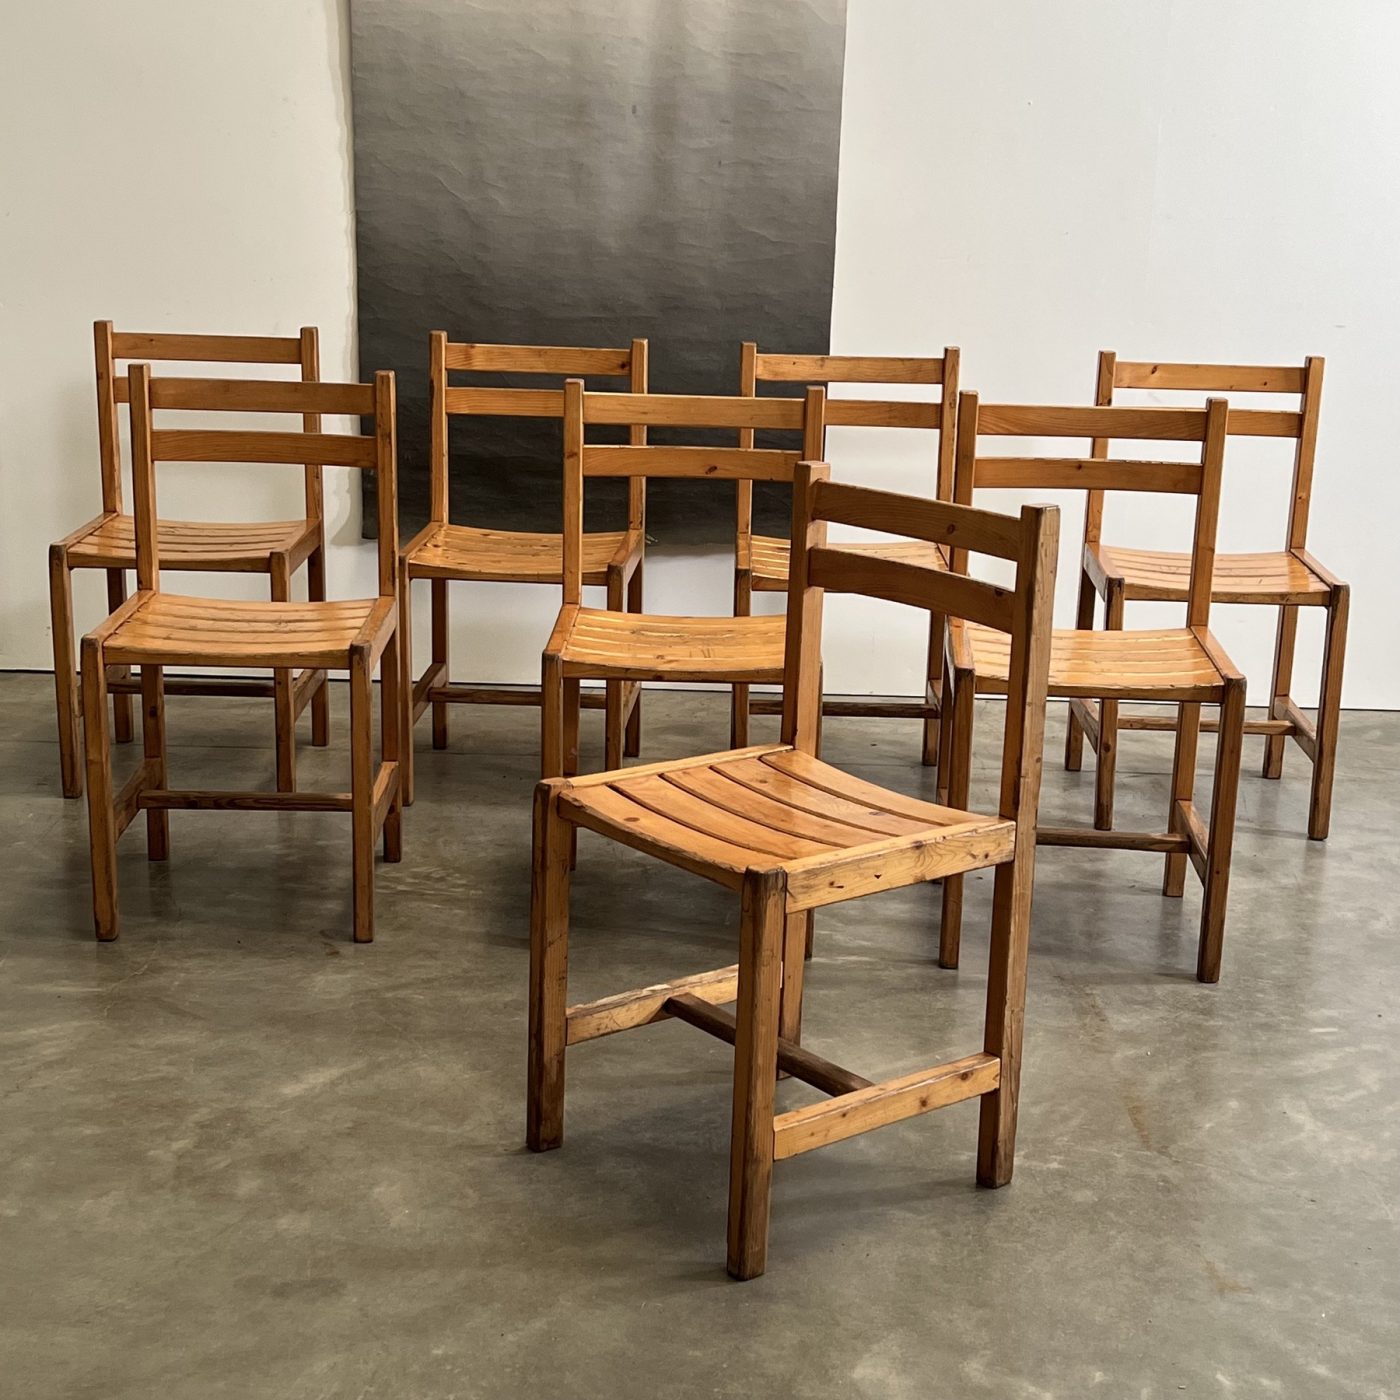 objet-vagabond-chairs0001